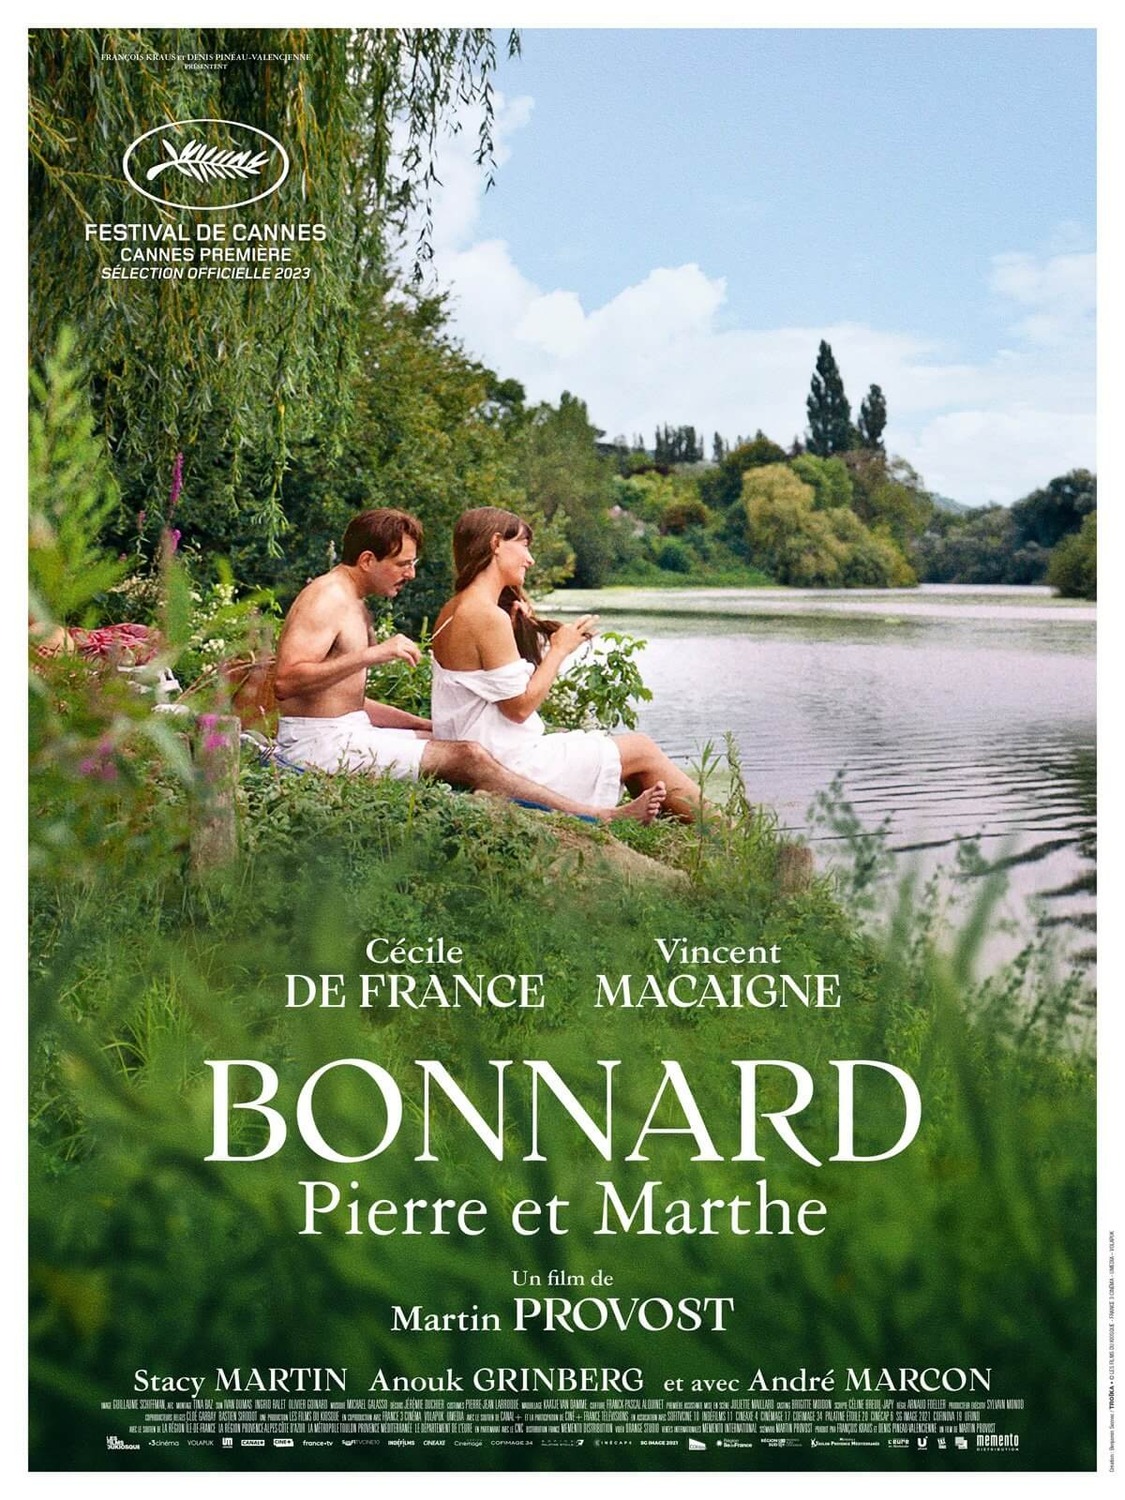 Extra Large Movie Poster Image for Bonnard, Pierre et Marthe 